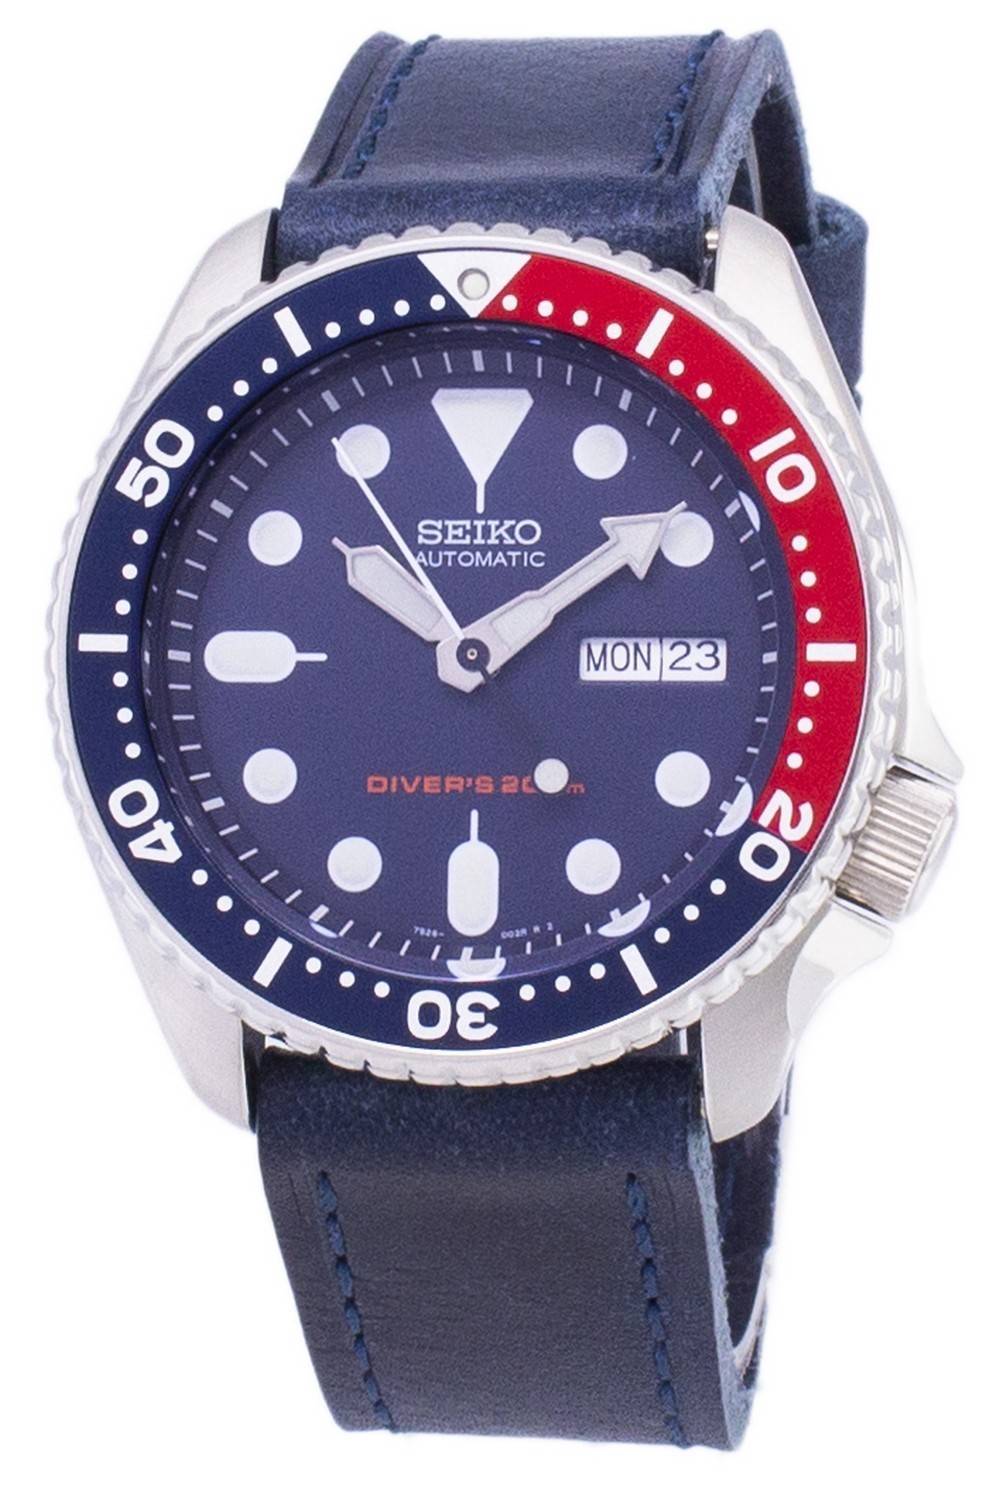 Seiko Automatic SKX009K1-var-LS13 Diver's 200M Dark Blue Leather Strap Men's Watch